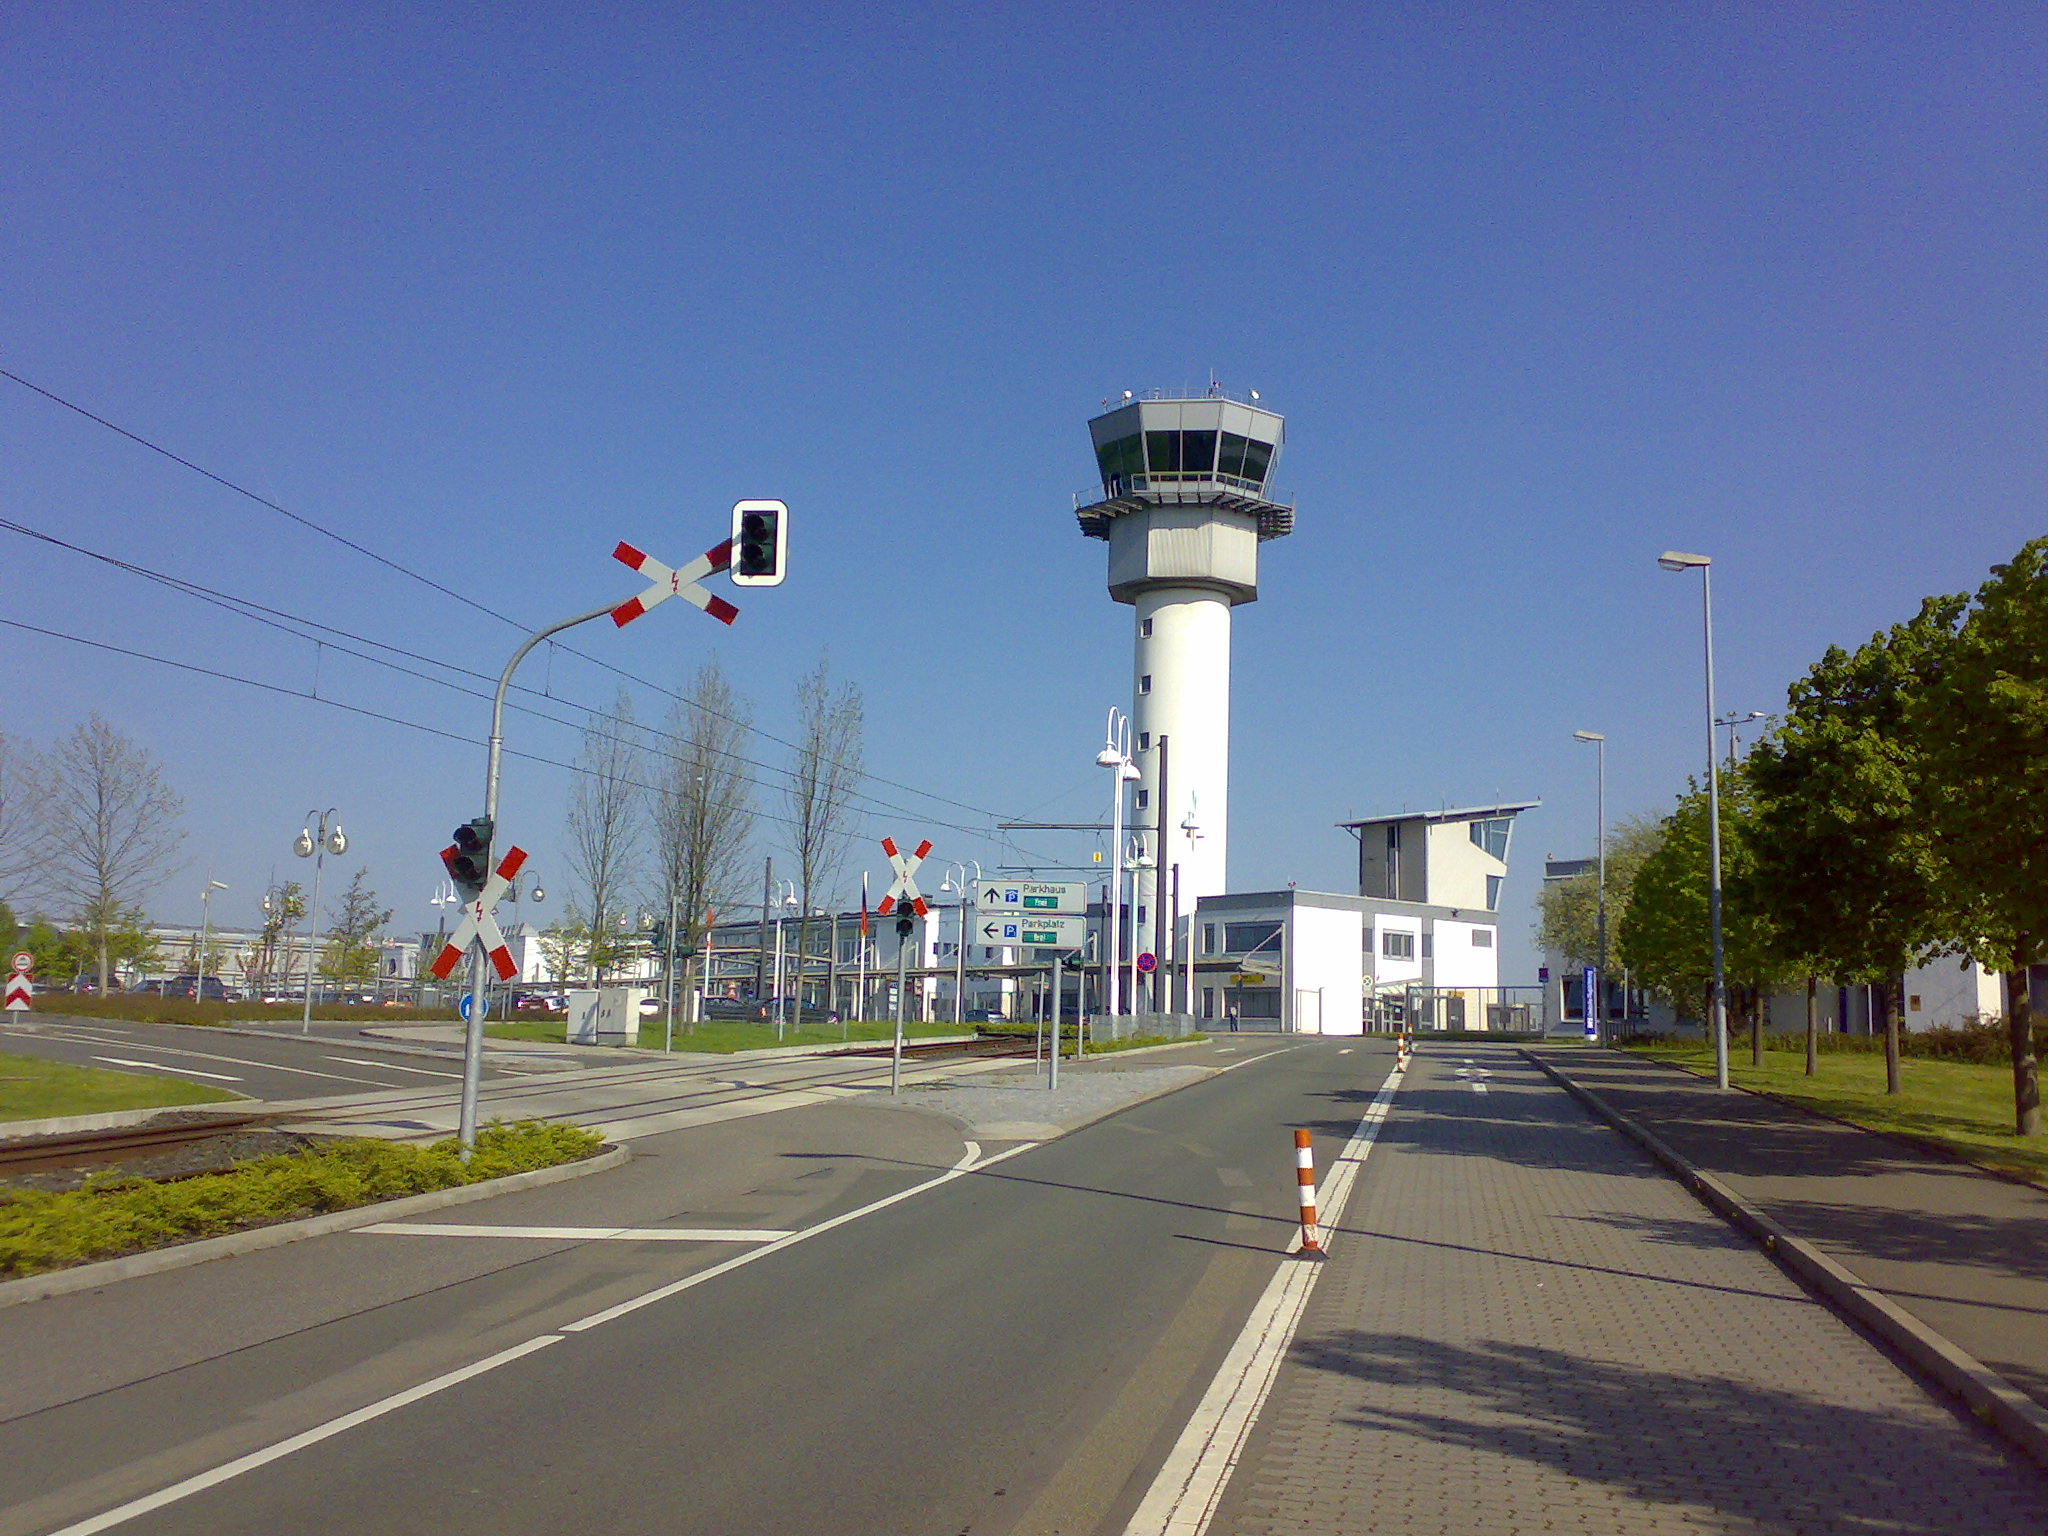 Erfurt airport tower